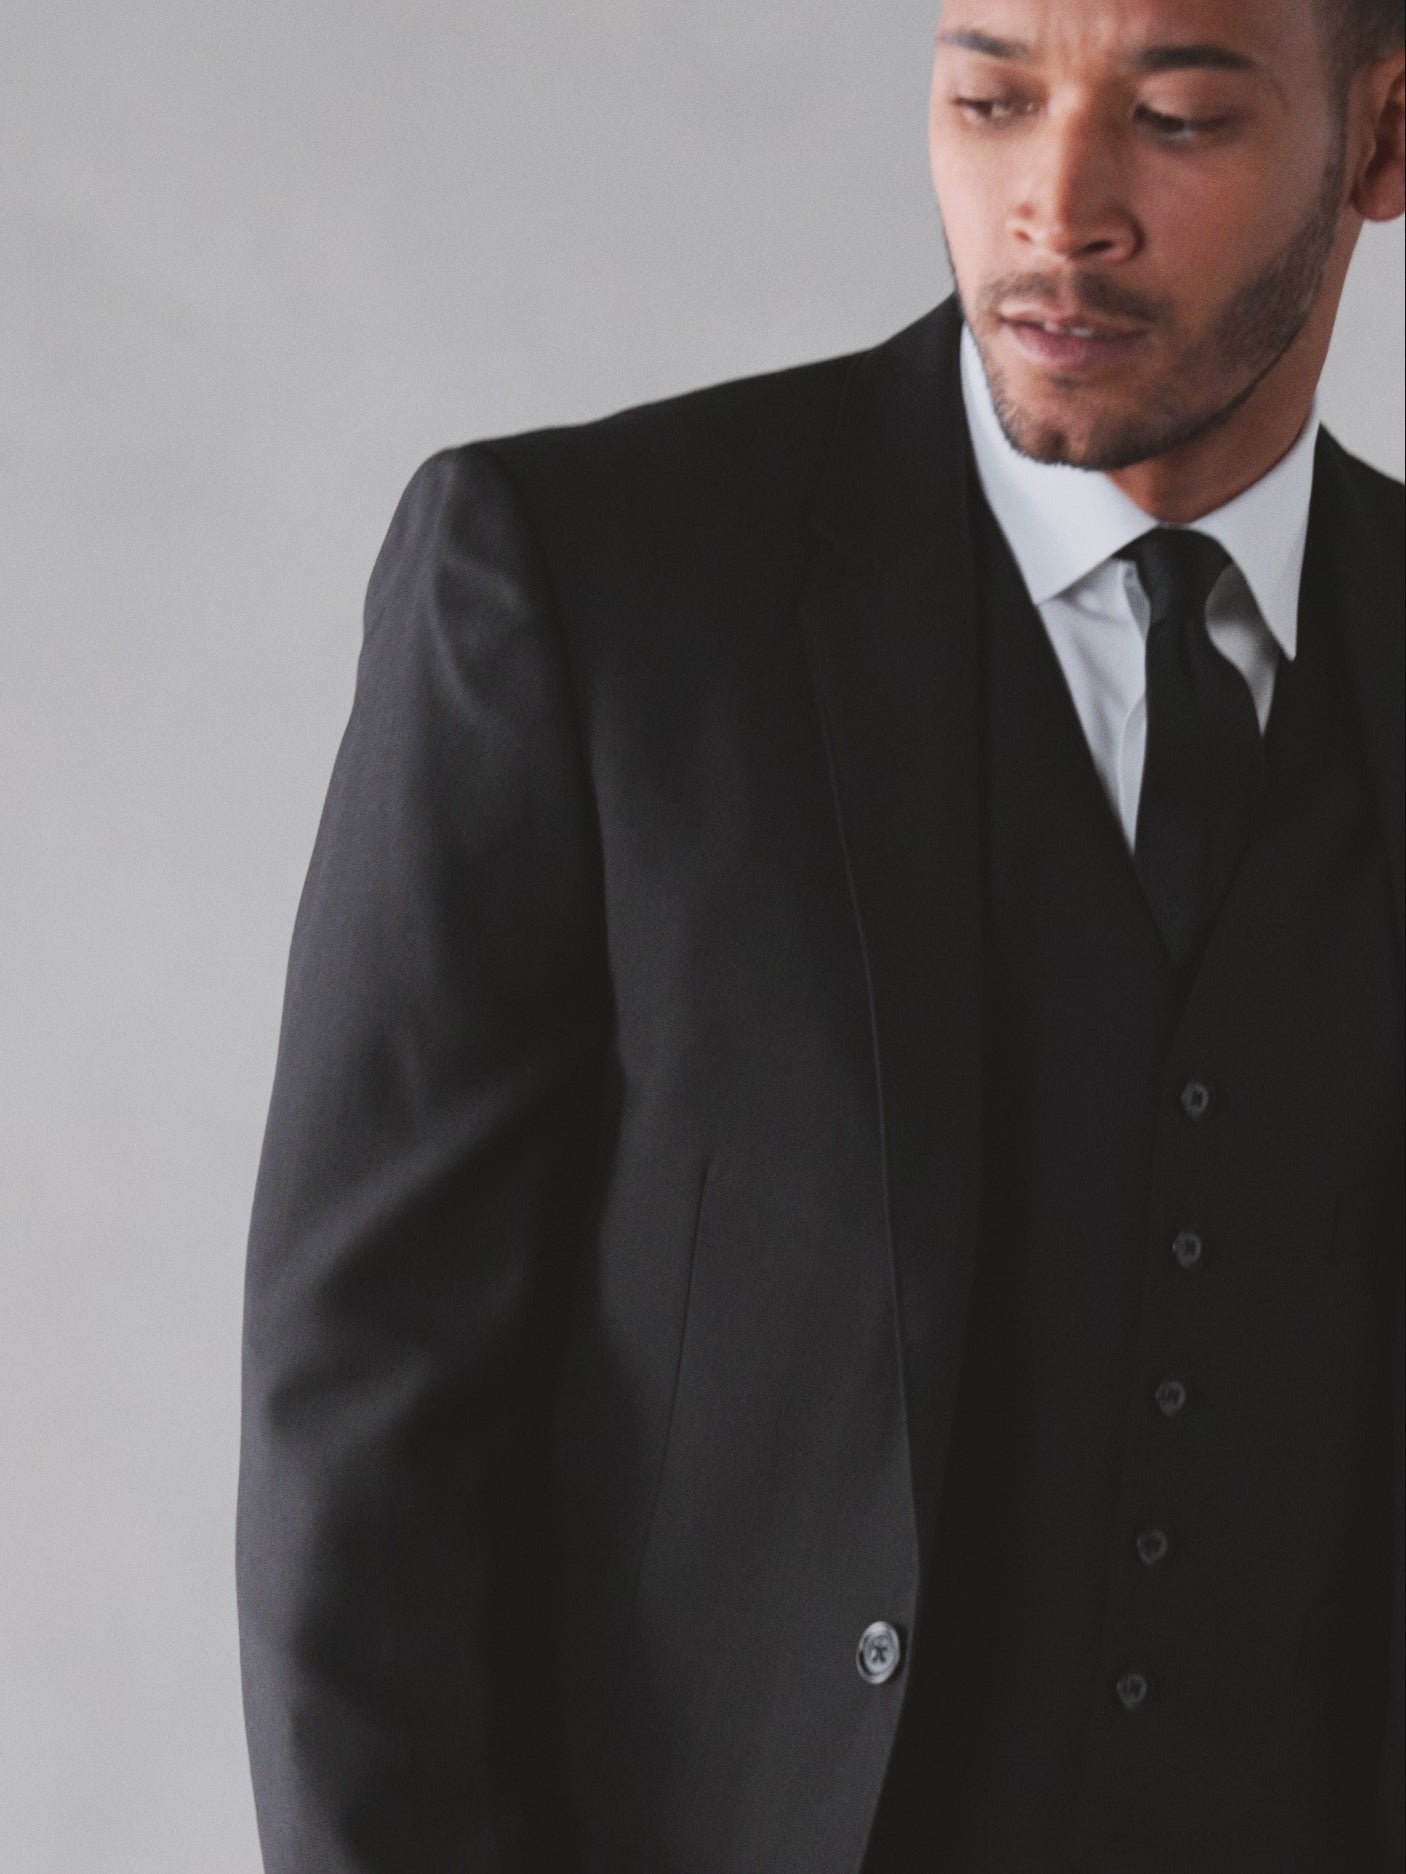 Shop Modern Men's Wedding Suits | The Modern Groom